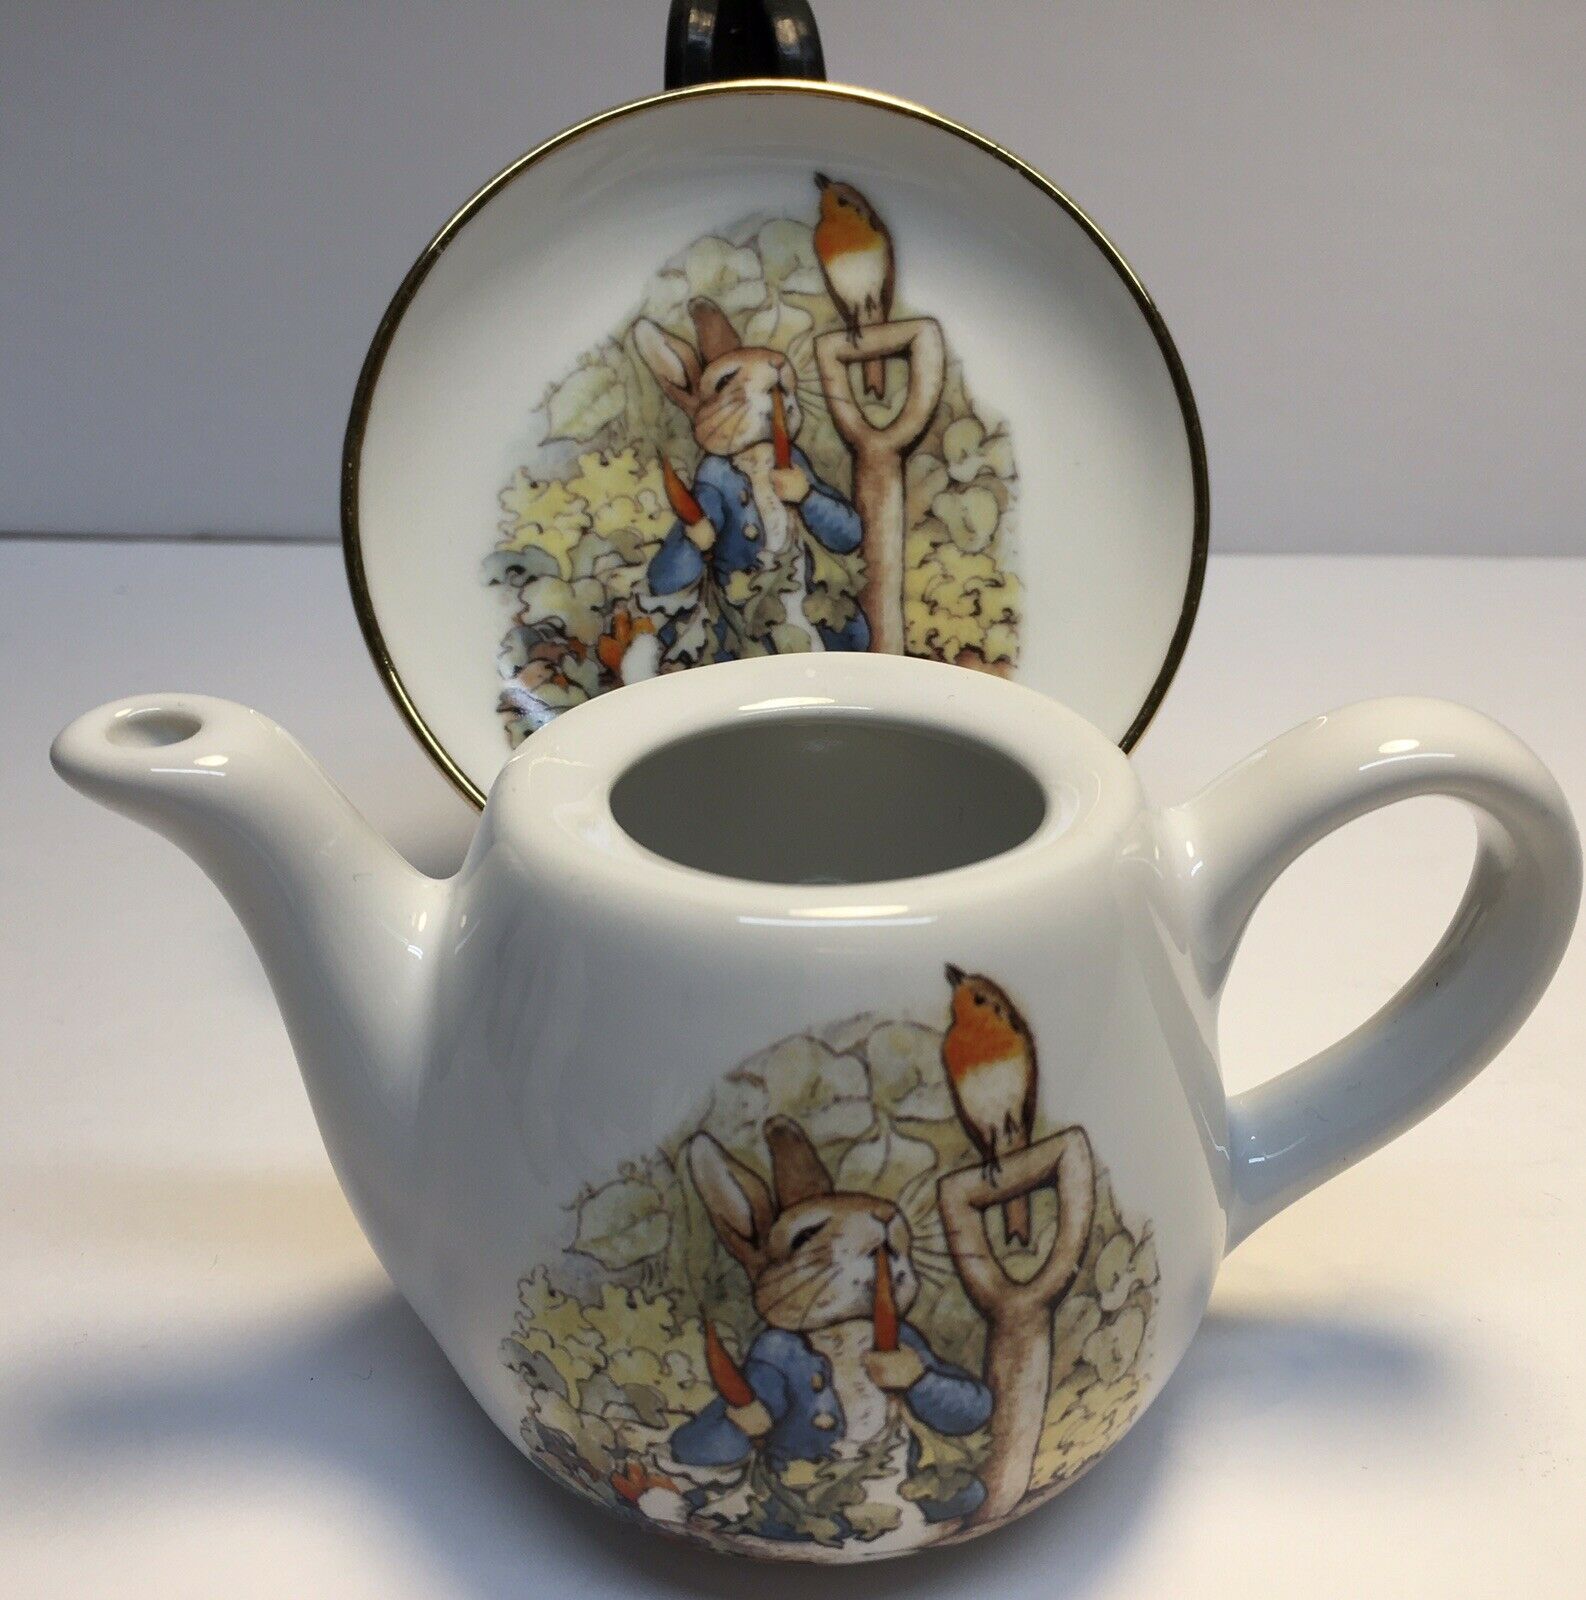 Peter Rabbit And Friends 2002 Reutter Porzellan Germany Mini Teapot And Dish